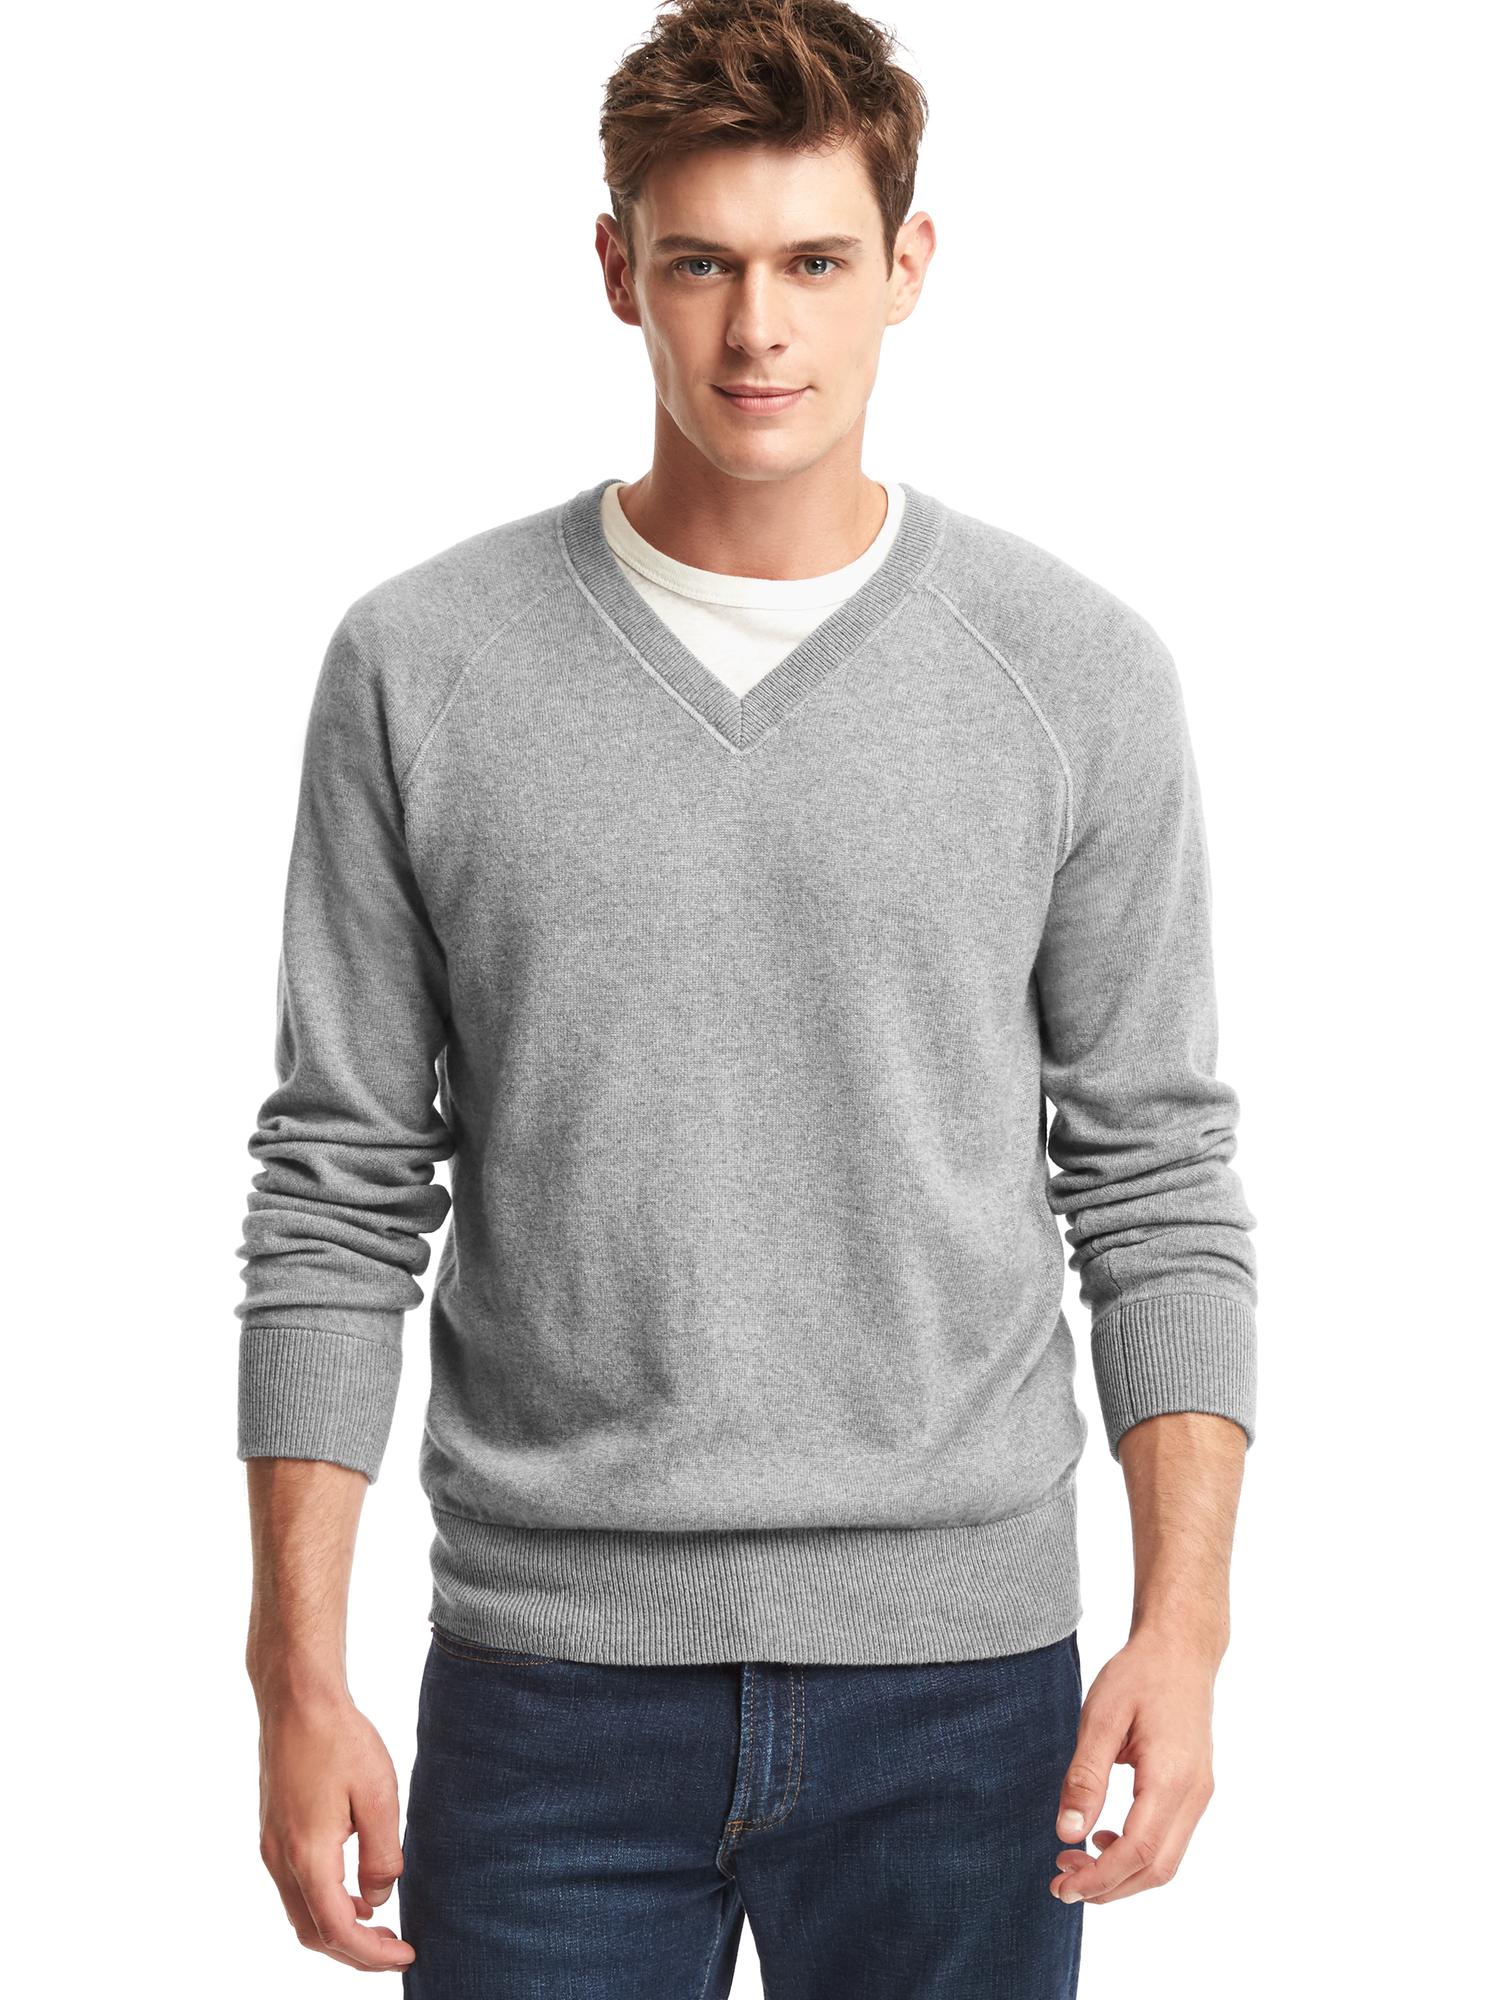 Wool V-neck sweater | Gap